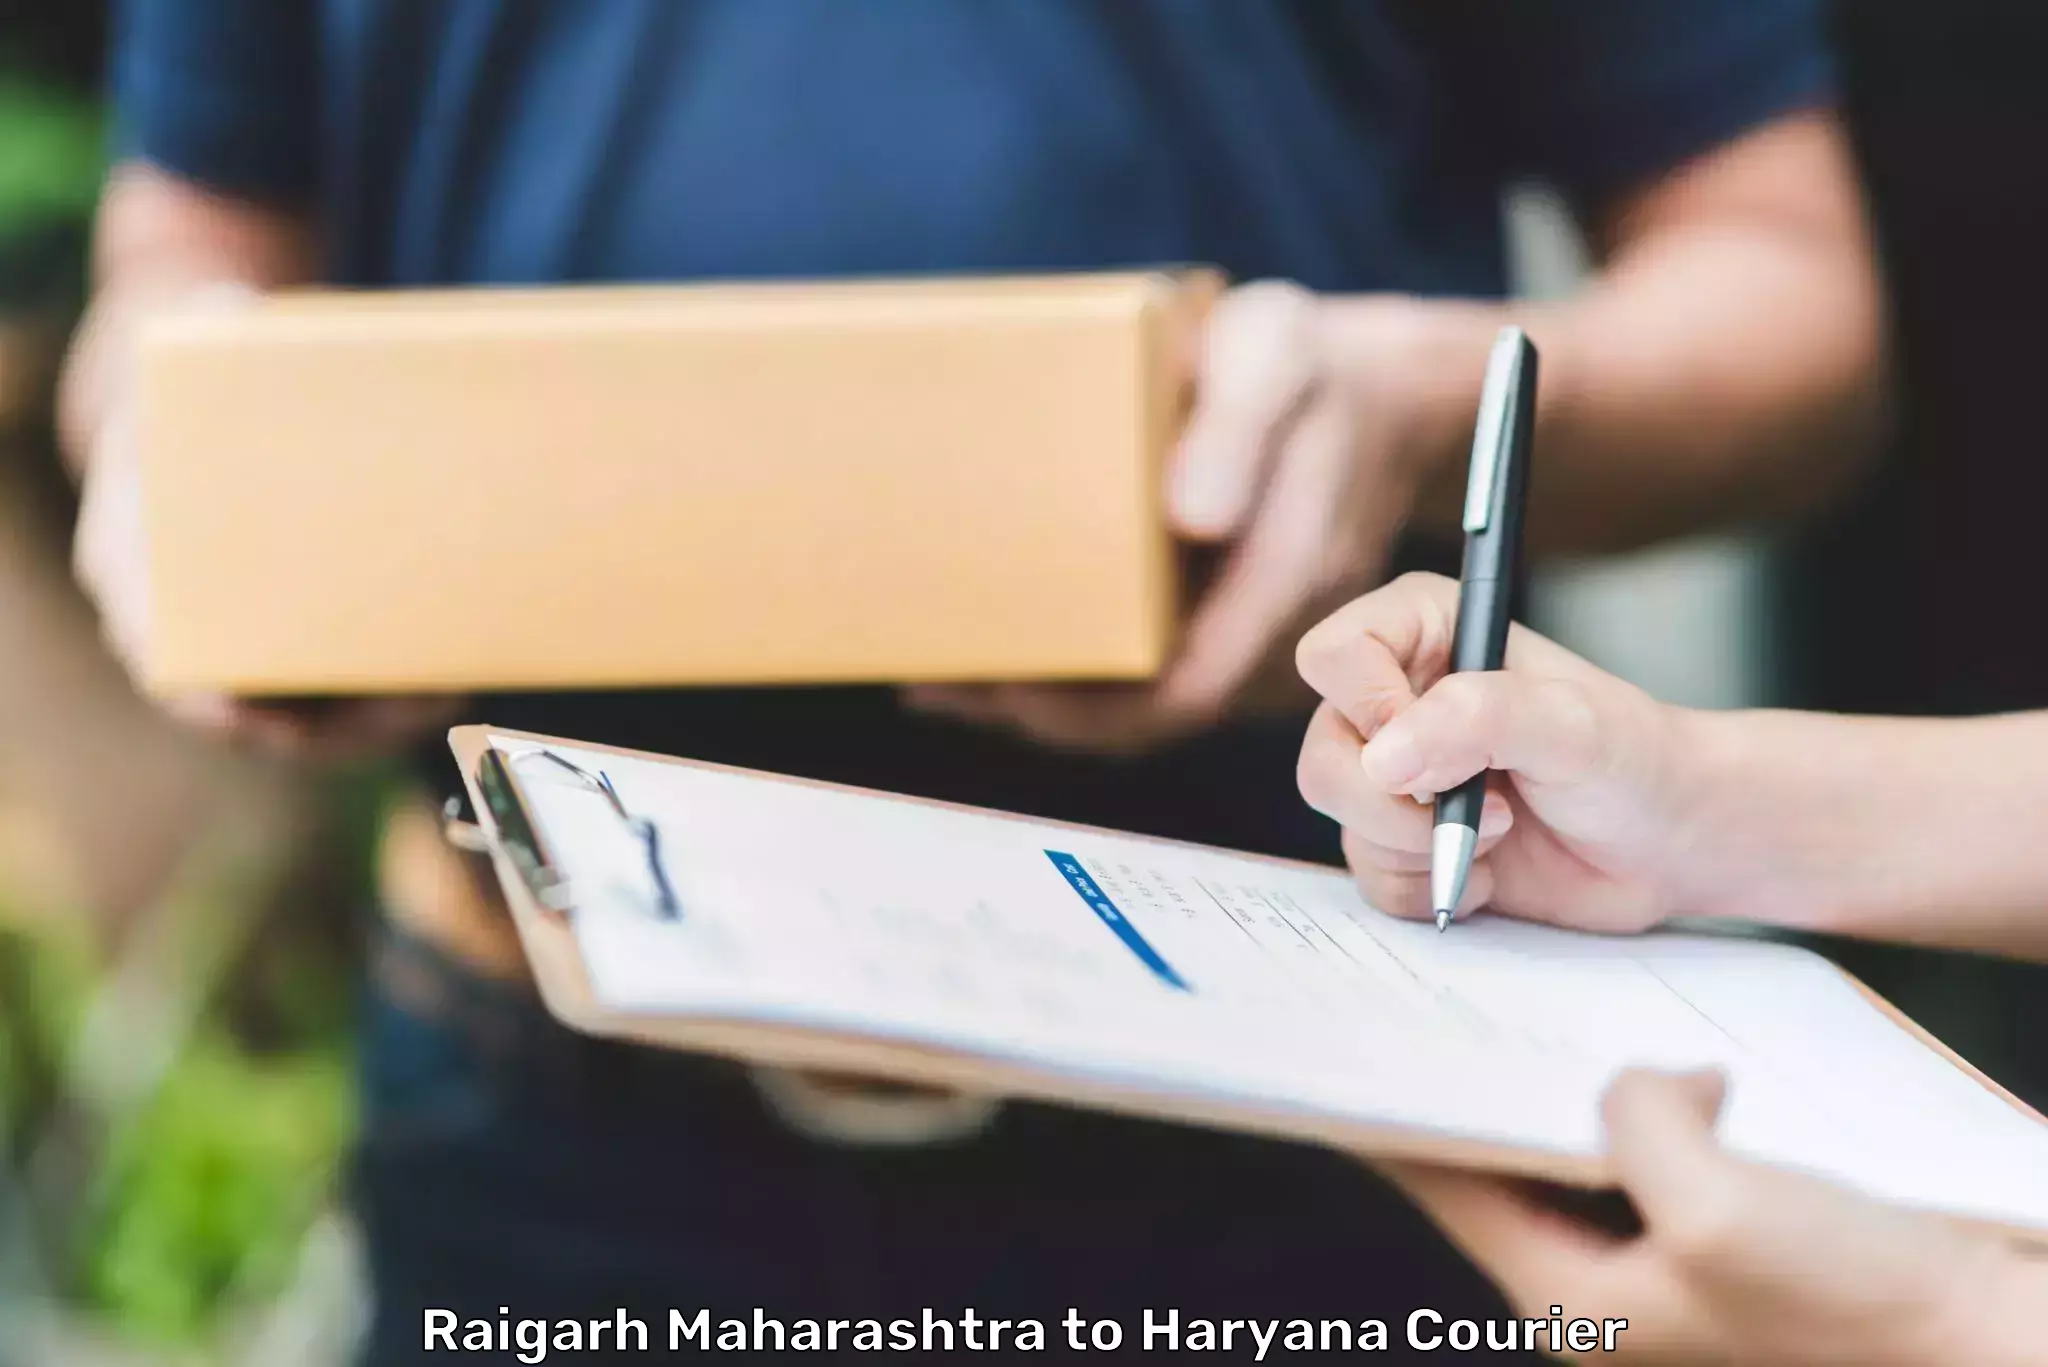 Courier service innovation Raigarh Maharashtra to Dharuhera